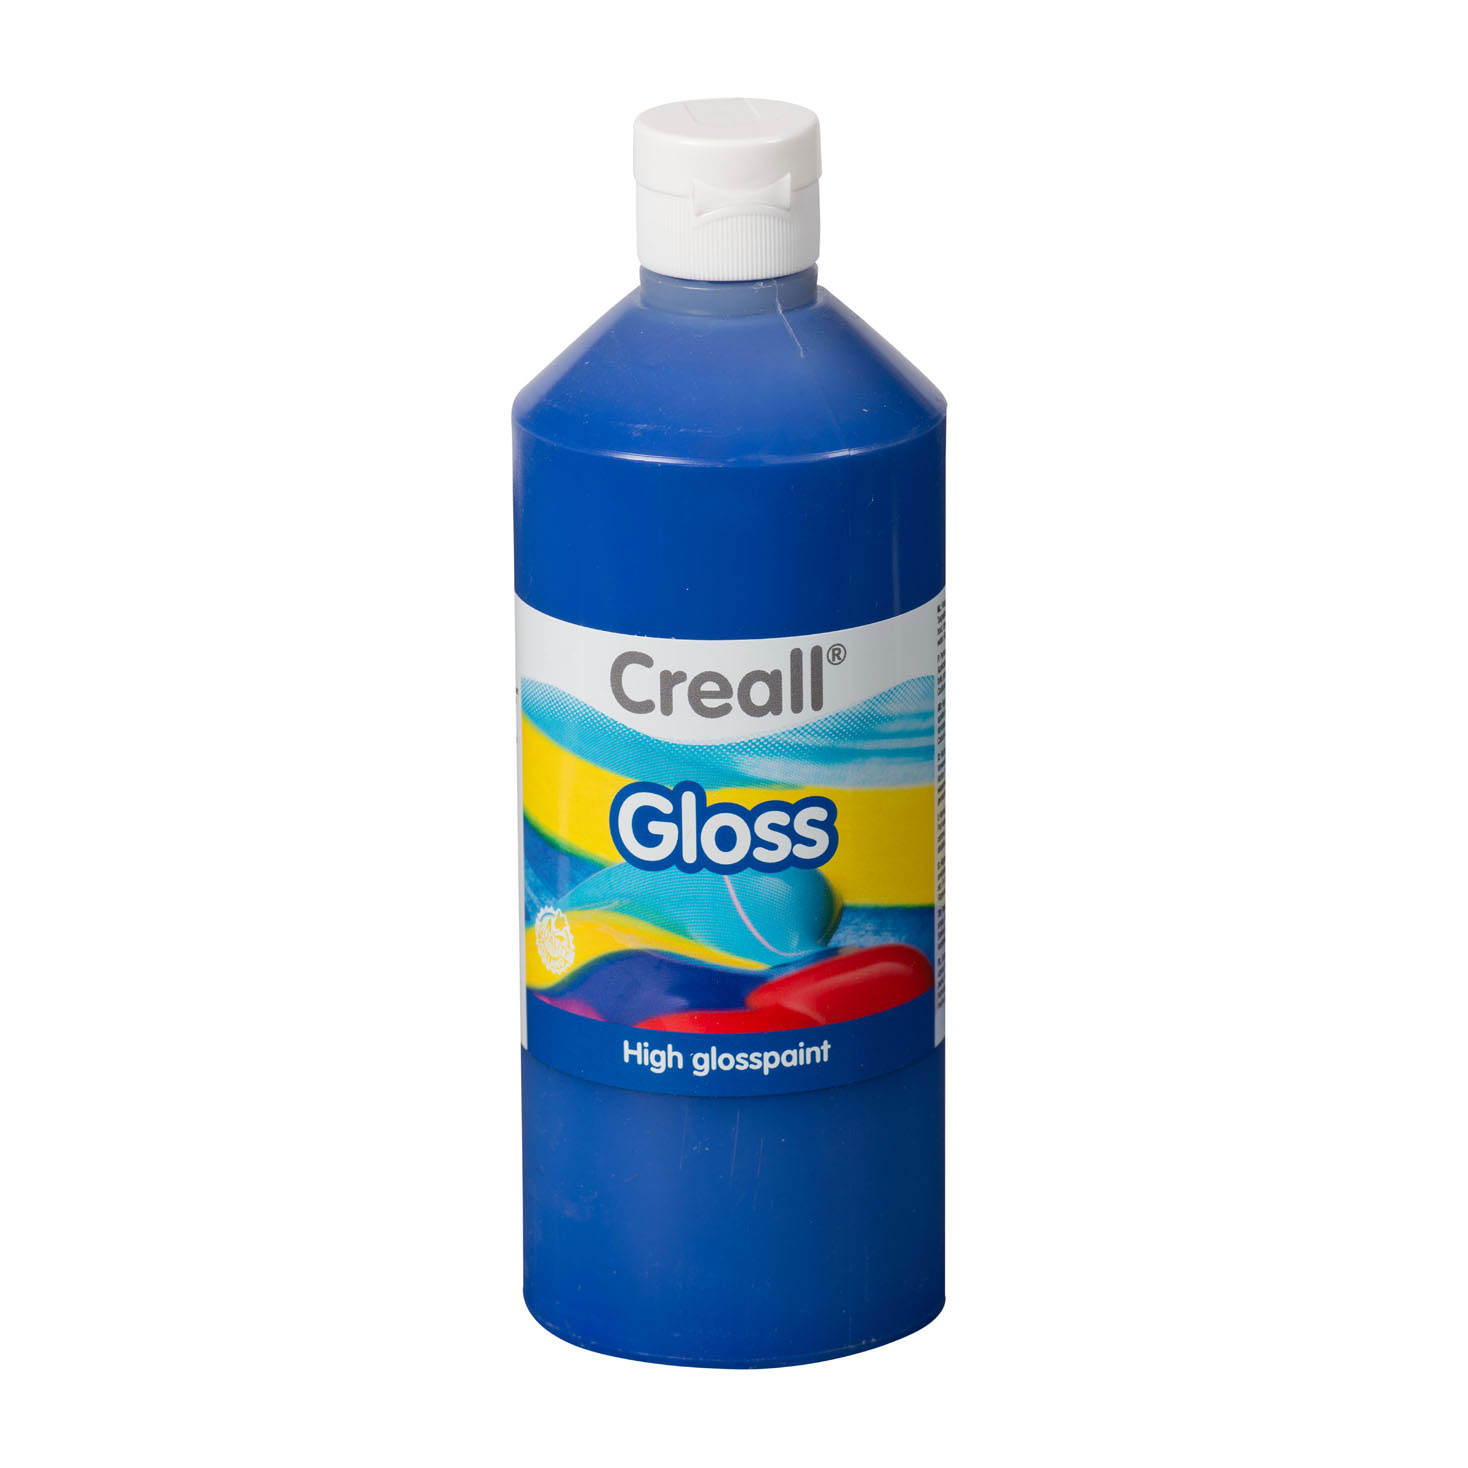 Creall Gloss Peinture Brillante Bleu, 500 ml